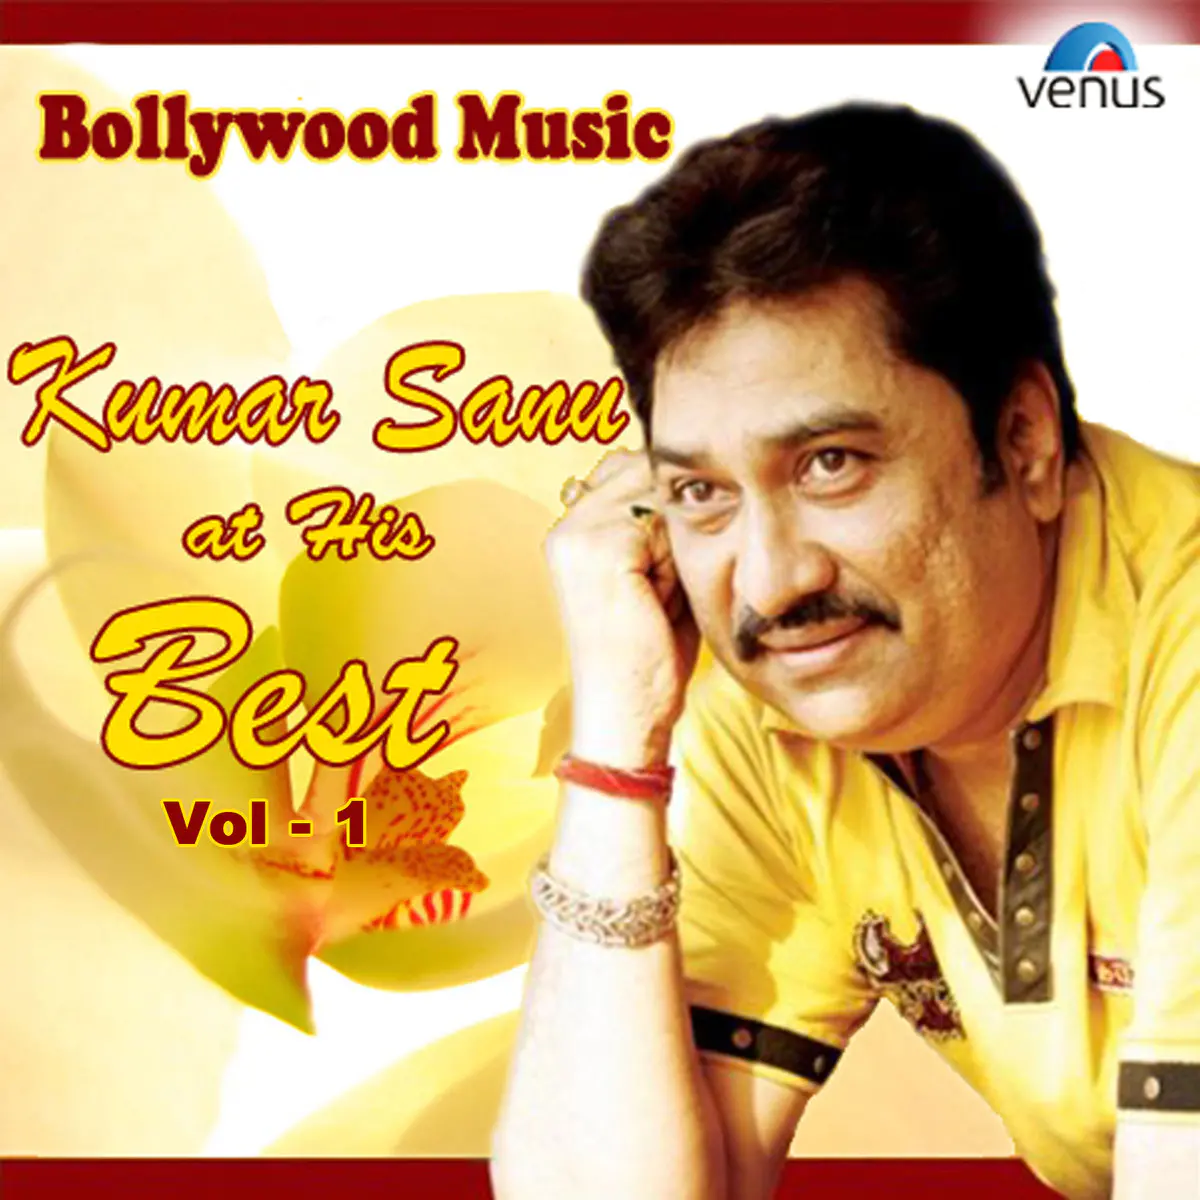 Raja Ko Rani Se Lyrics In Hindi Bollywood Music Kumar Sanu At His Best Vol 1 Raja Ko Rani Se Song Lyrics In English Free Online On Gaana Com Raja ko rani se pyaar ho gaya. gaana